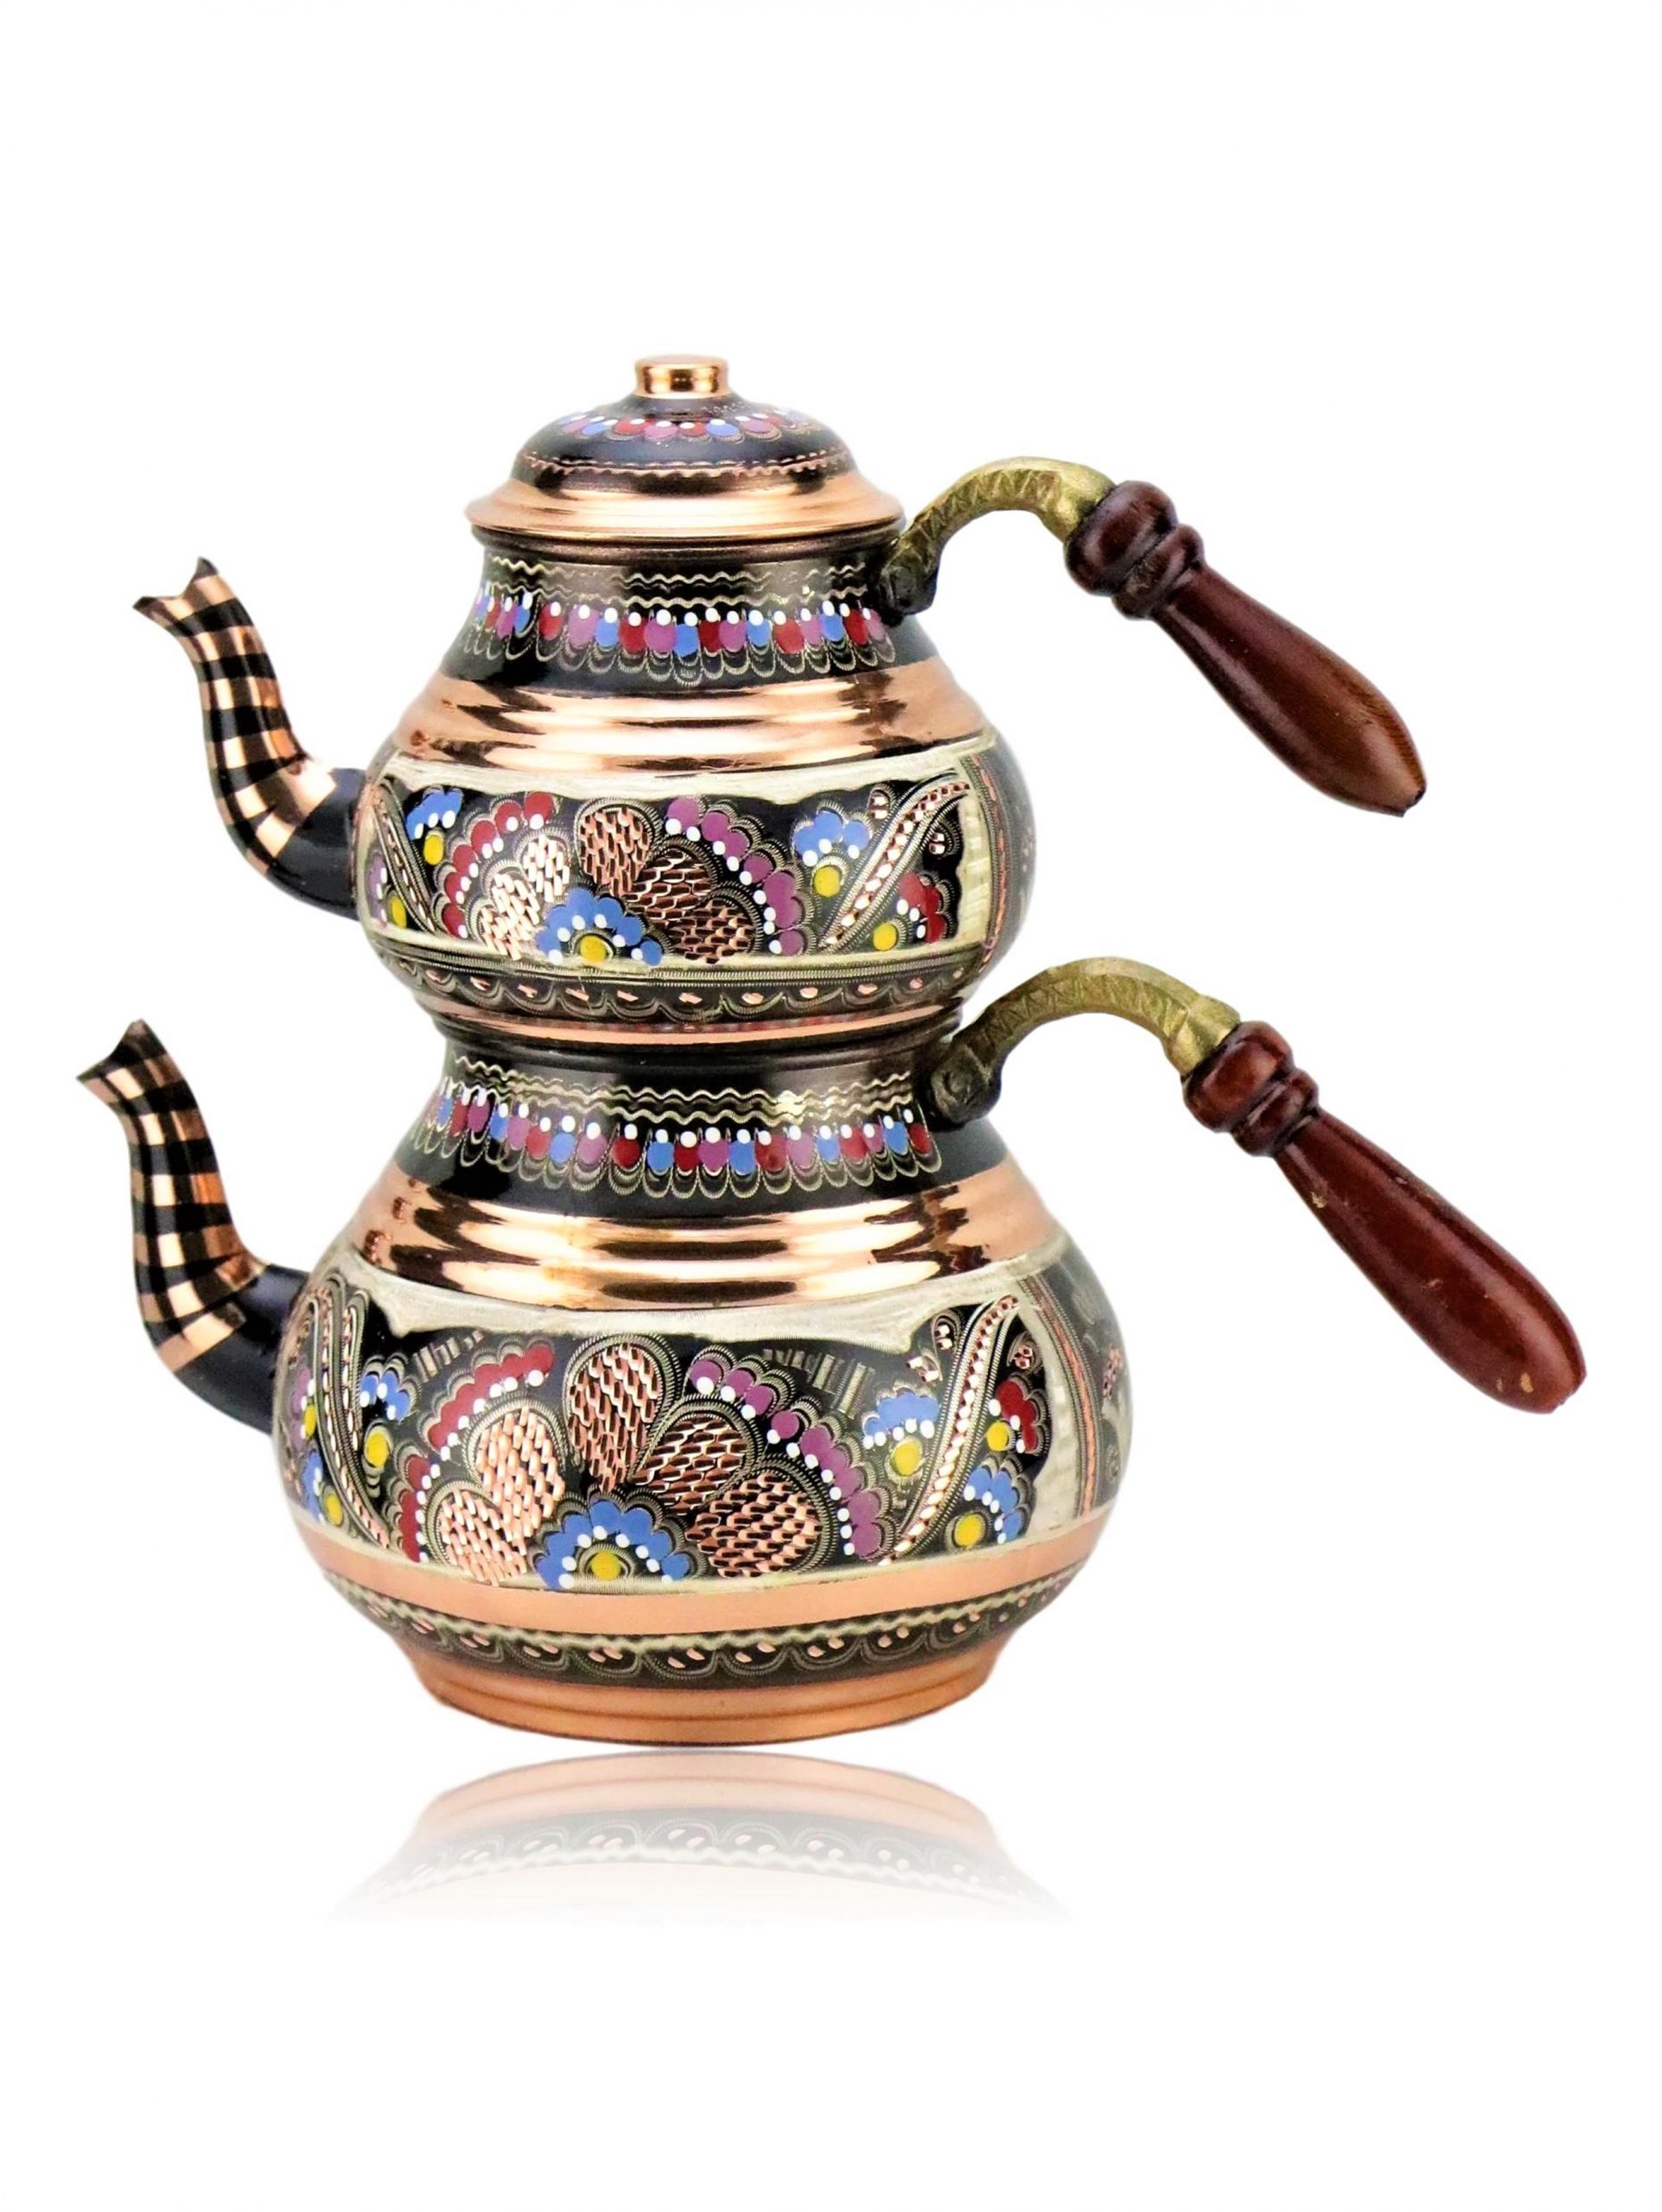 https://traditionalturk.com/wp-content/uploads/2020/04/handmade-original-copper-turkish-tea-pot-kettle-with-wood-handle-1-scaled.jpeg